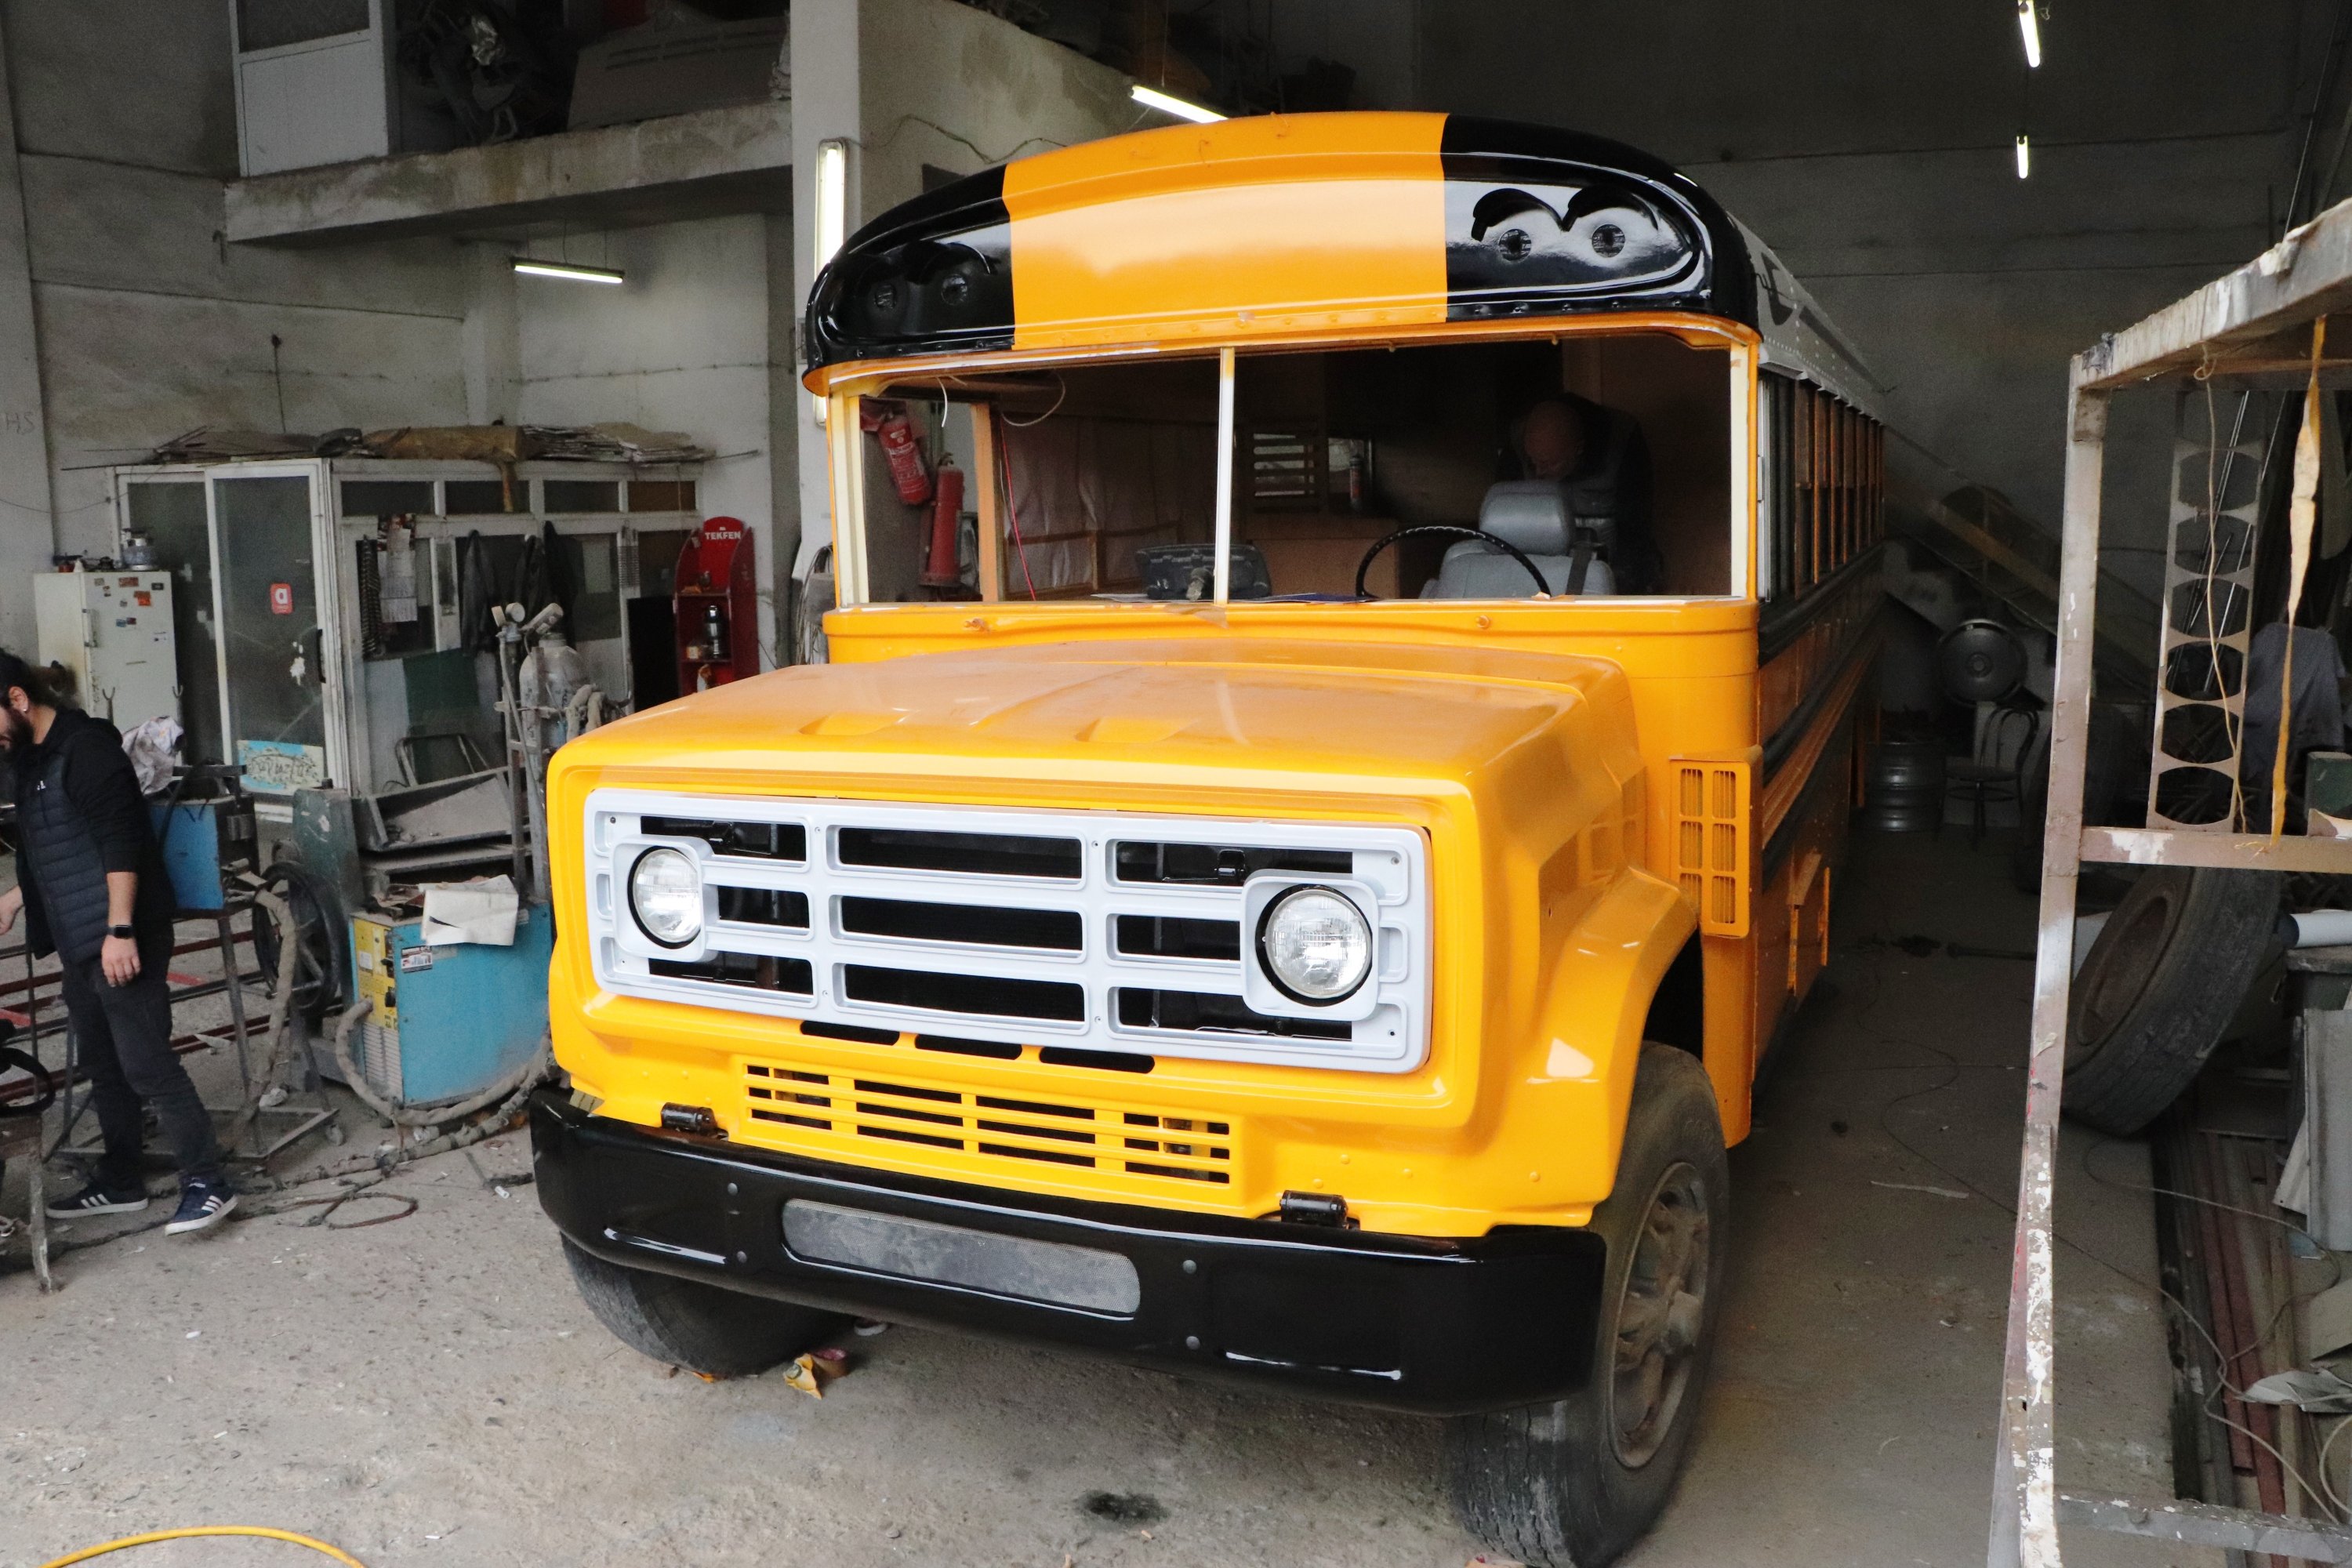 Kadir Mert's refurbished U.S.-style school bus in the workshop, Samsun, northwestern Turkey, Nov. 11, 2021. (IHA Photo)